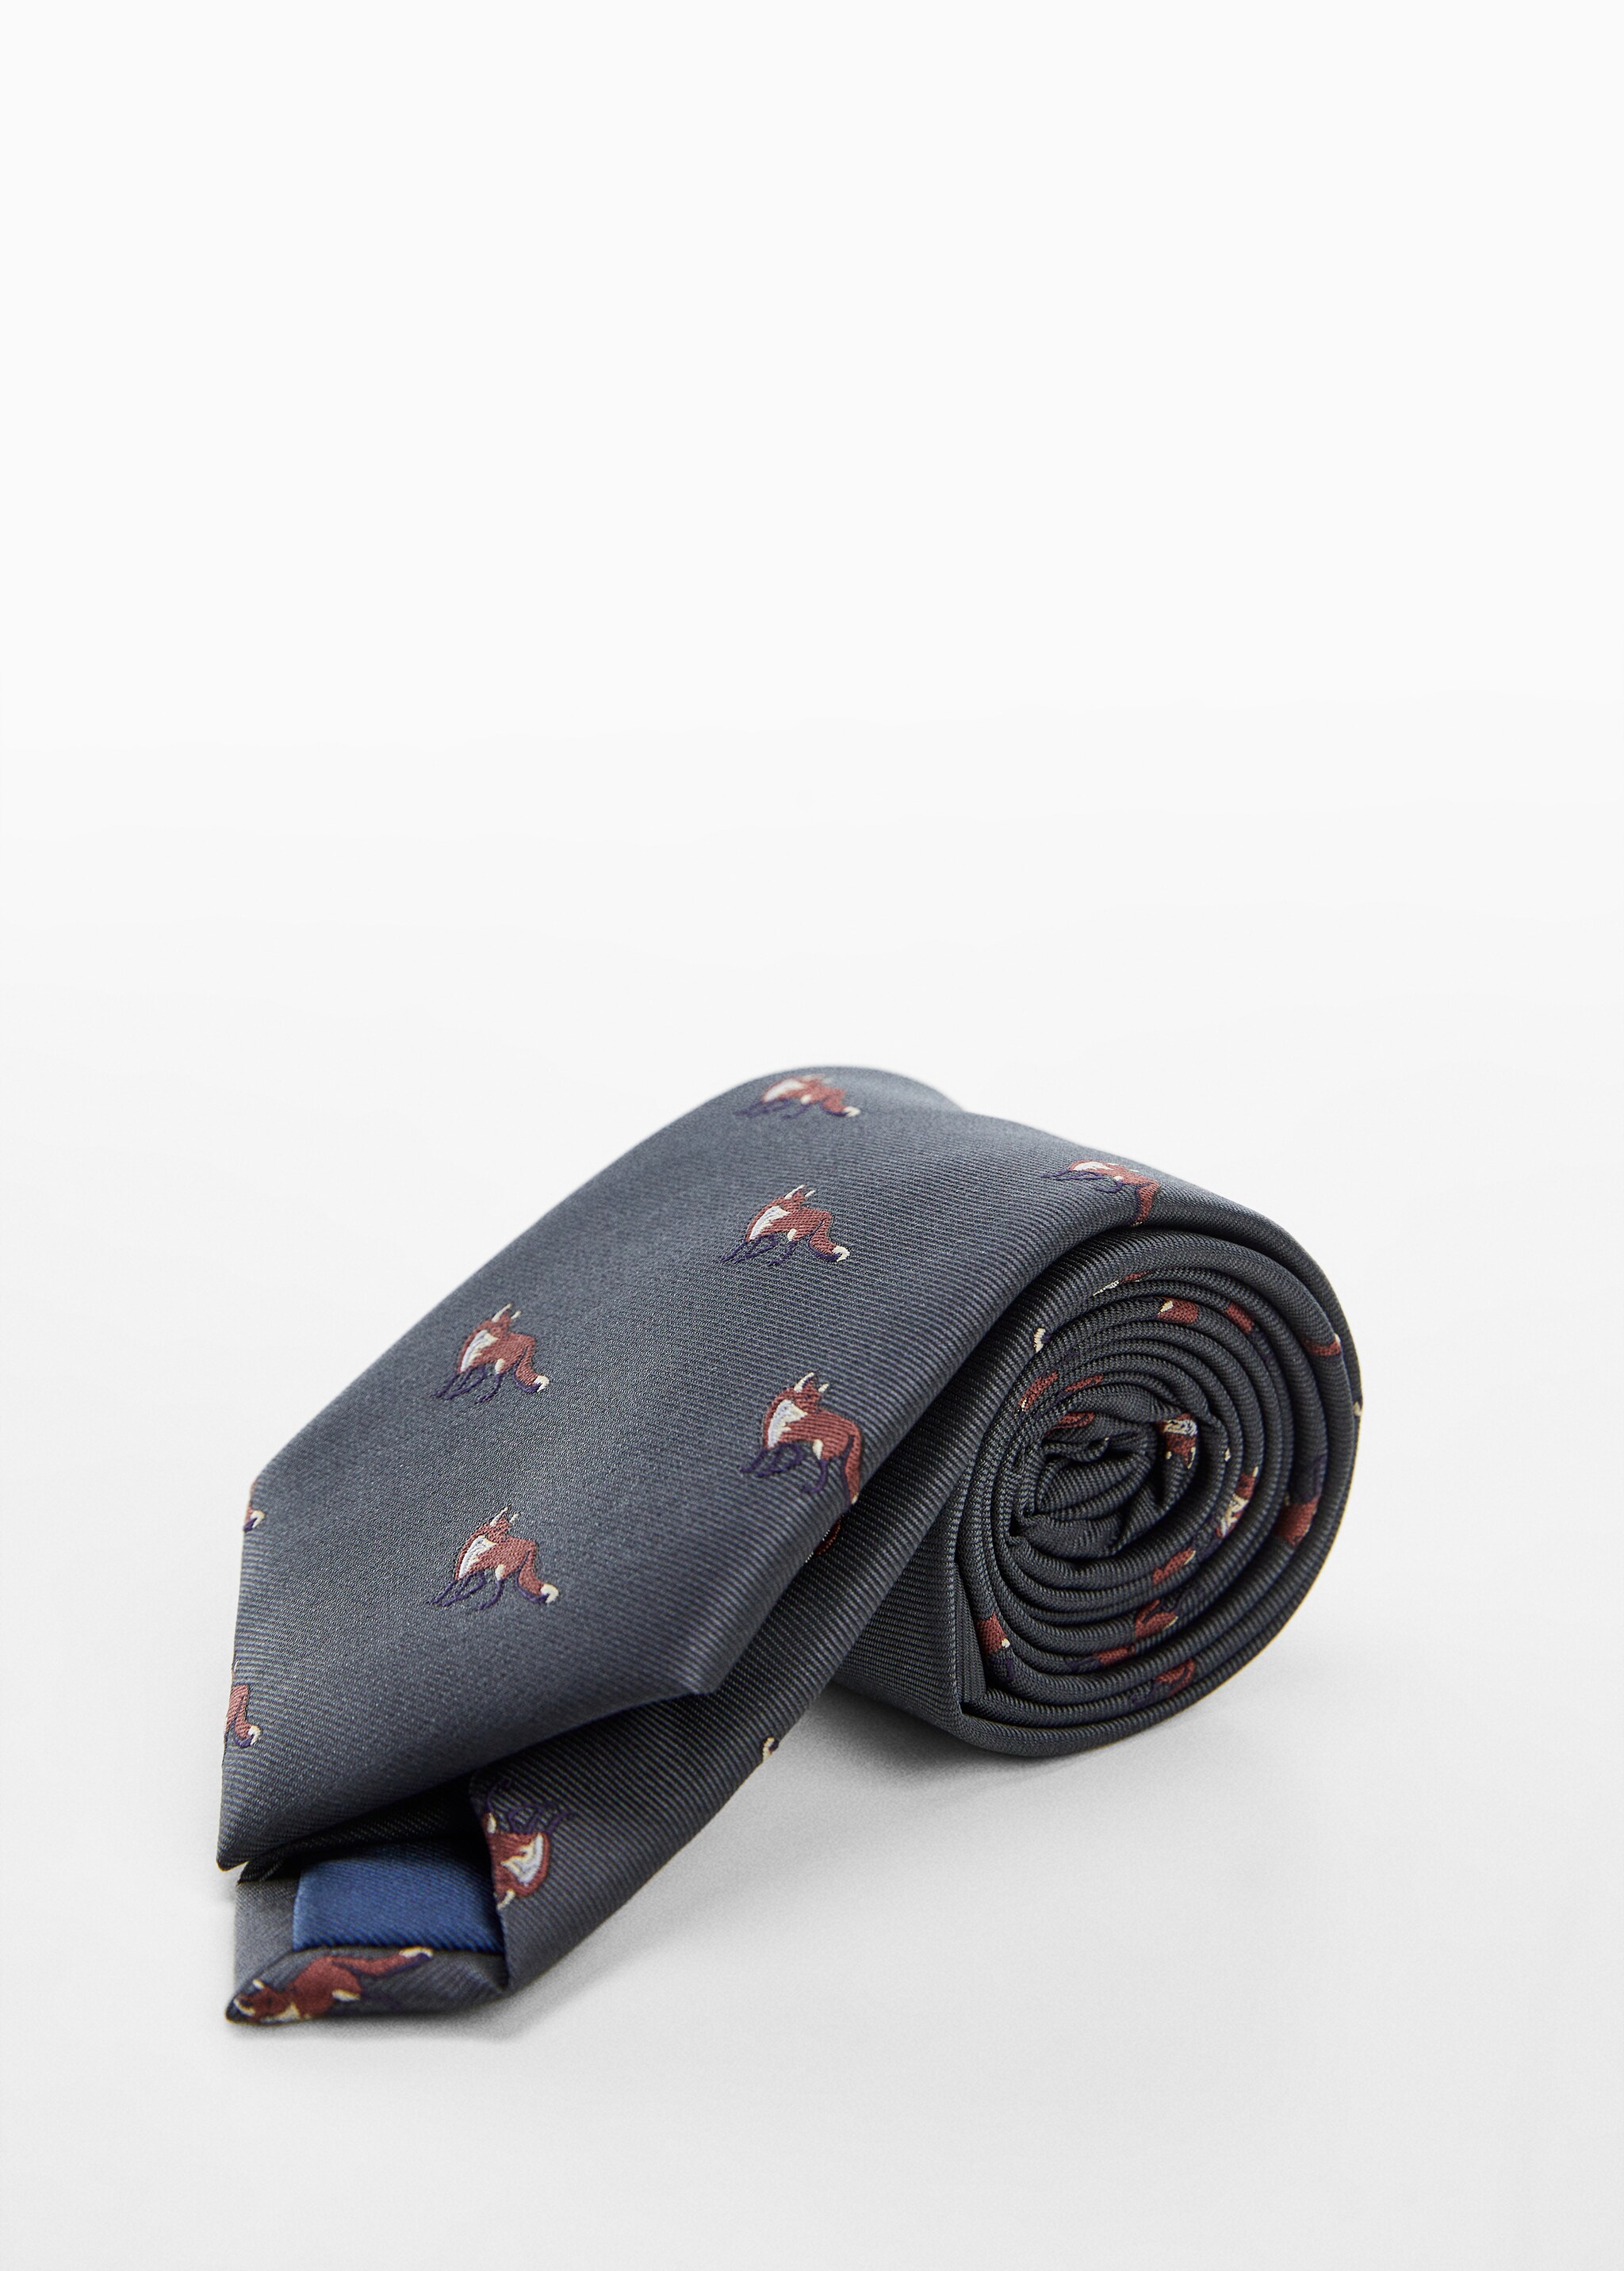 Tie with animals print  - Medium plane